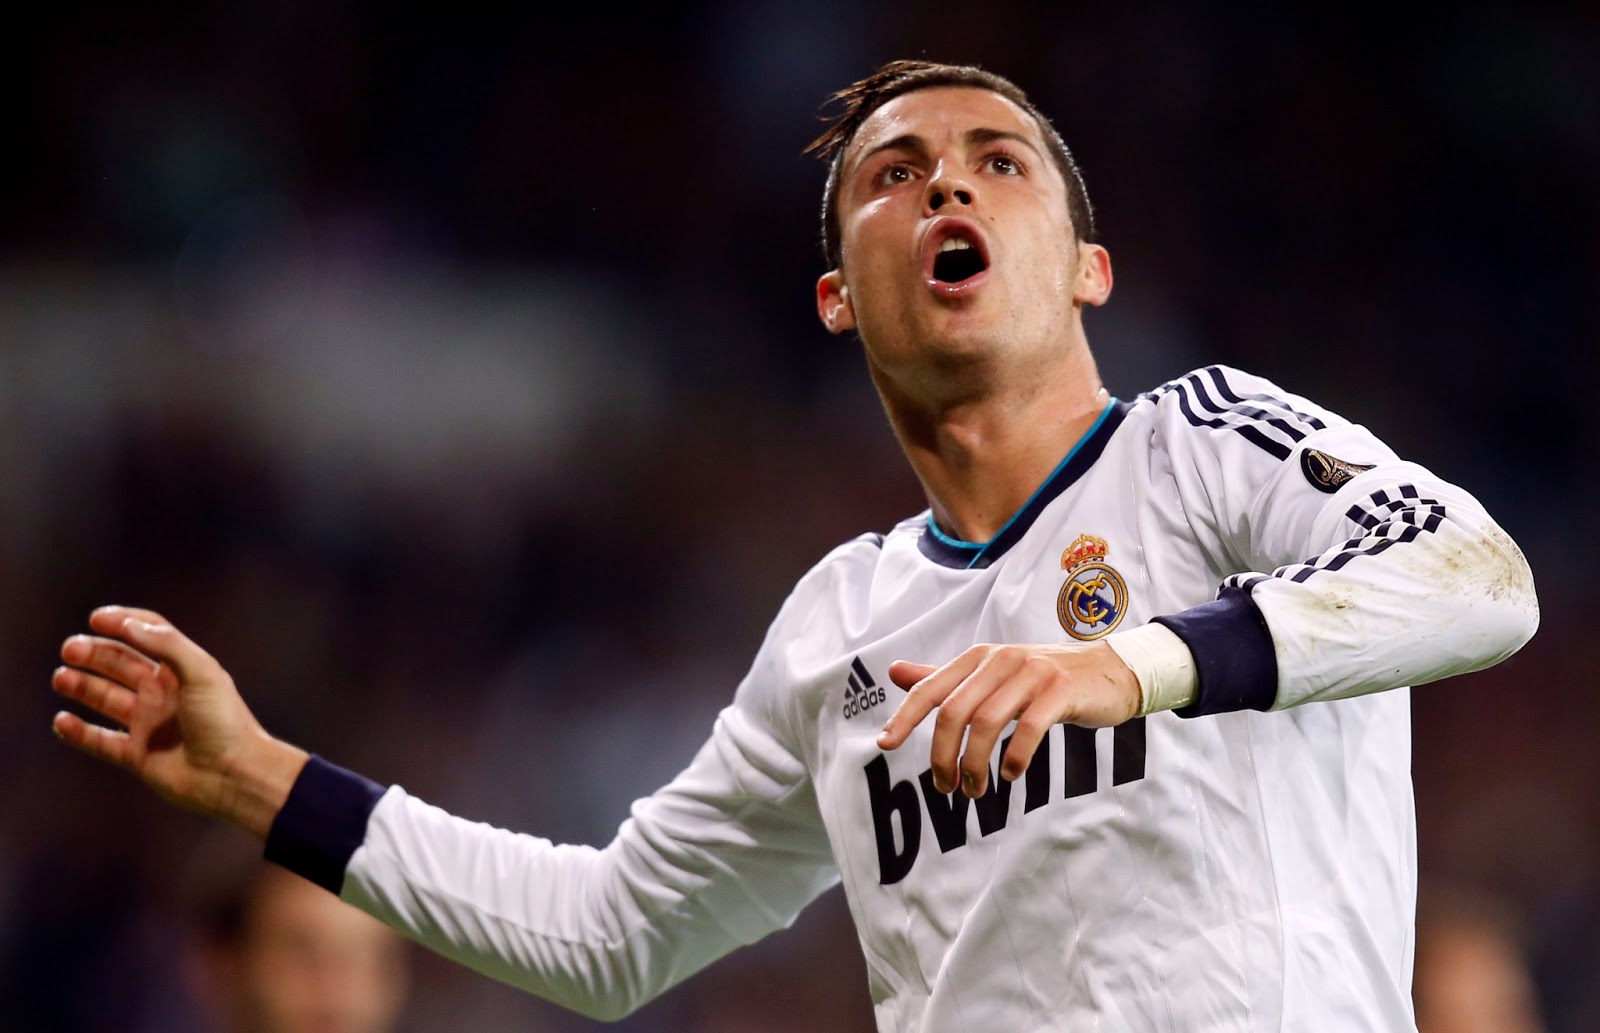 New-Cristiano-Ronaldo-Real-Madrid-Wallpaper-HD.